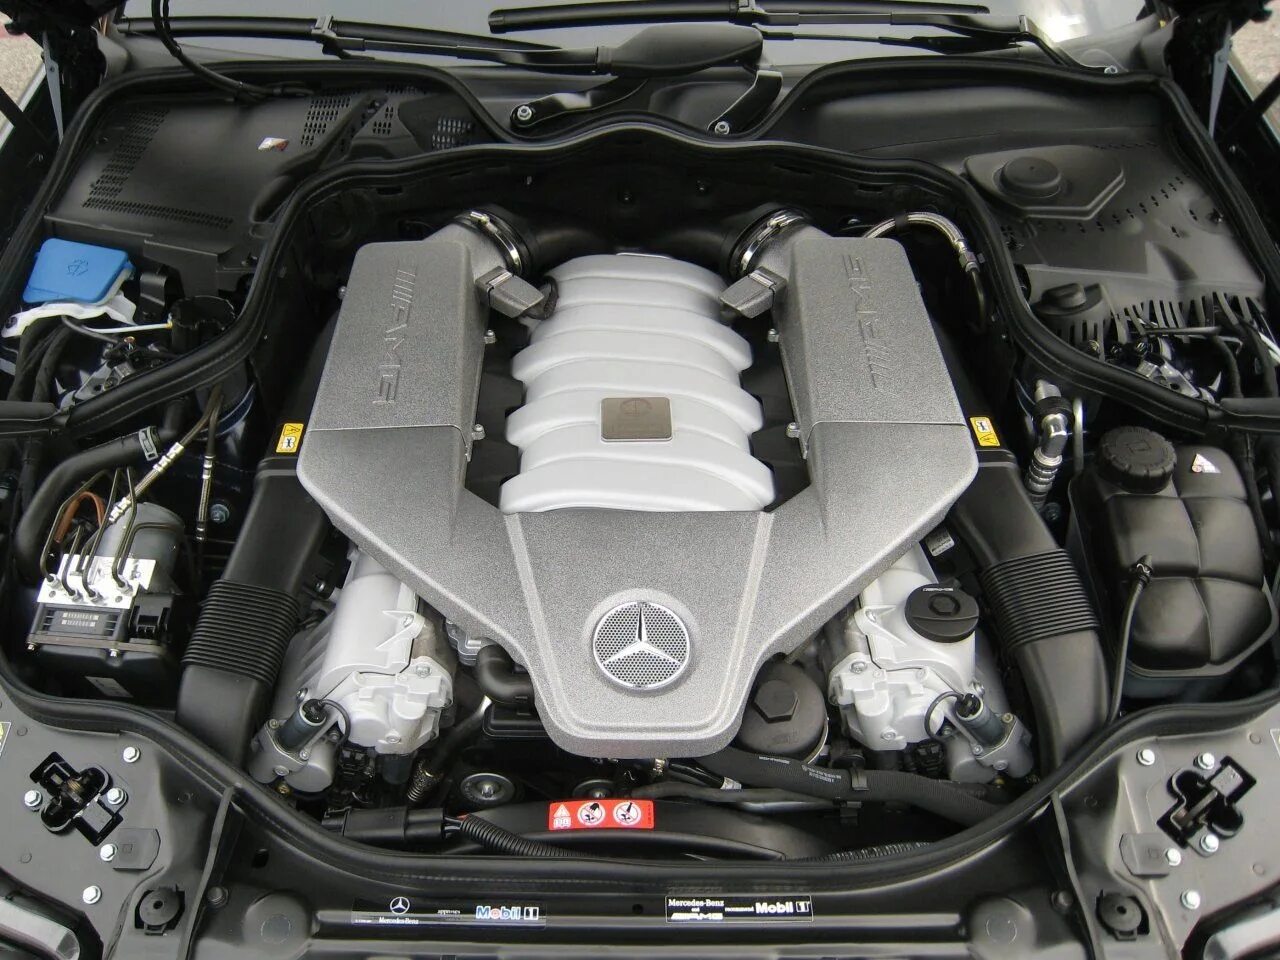 Mercedes e двигатели. Мотор m156 AMG. Мотор m156 AMG 6.3. Двигатель Мерседес 6.3 AMG. Mercedes Benz.w211 мотор.